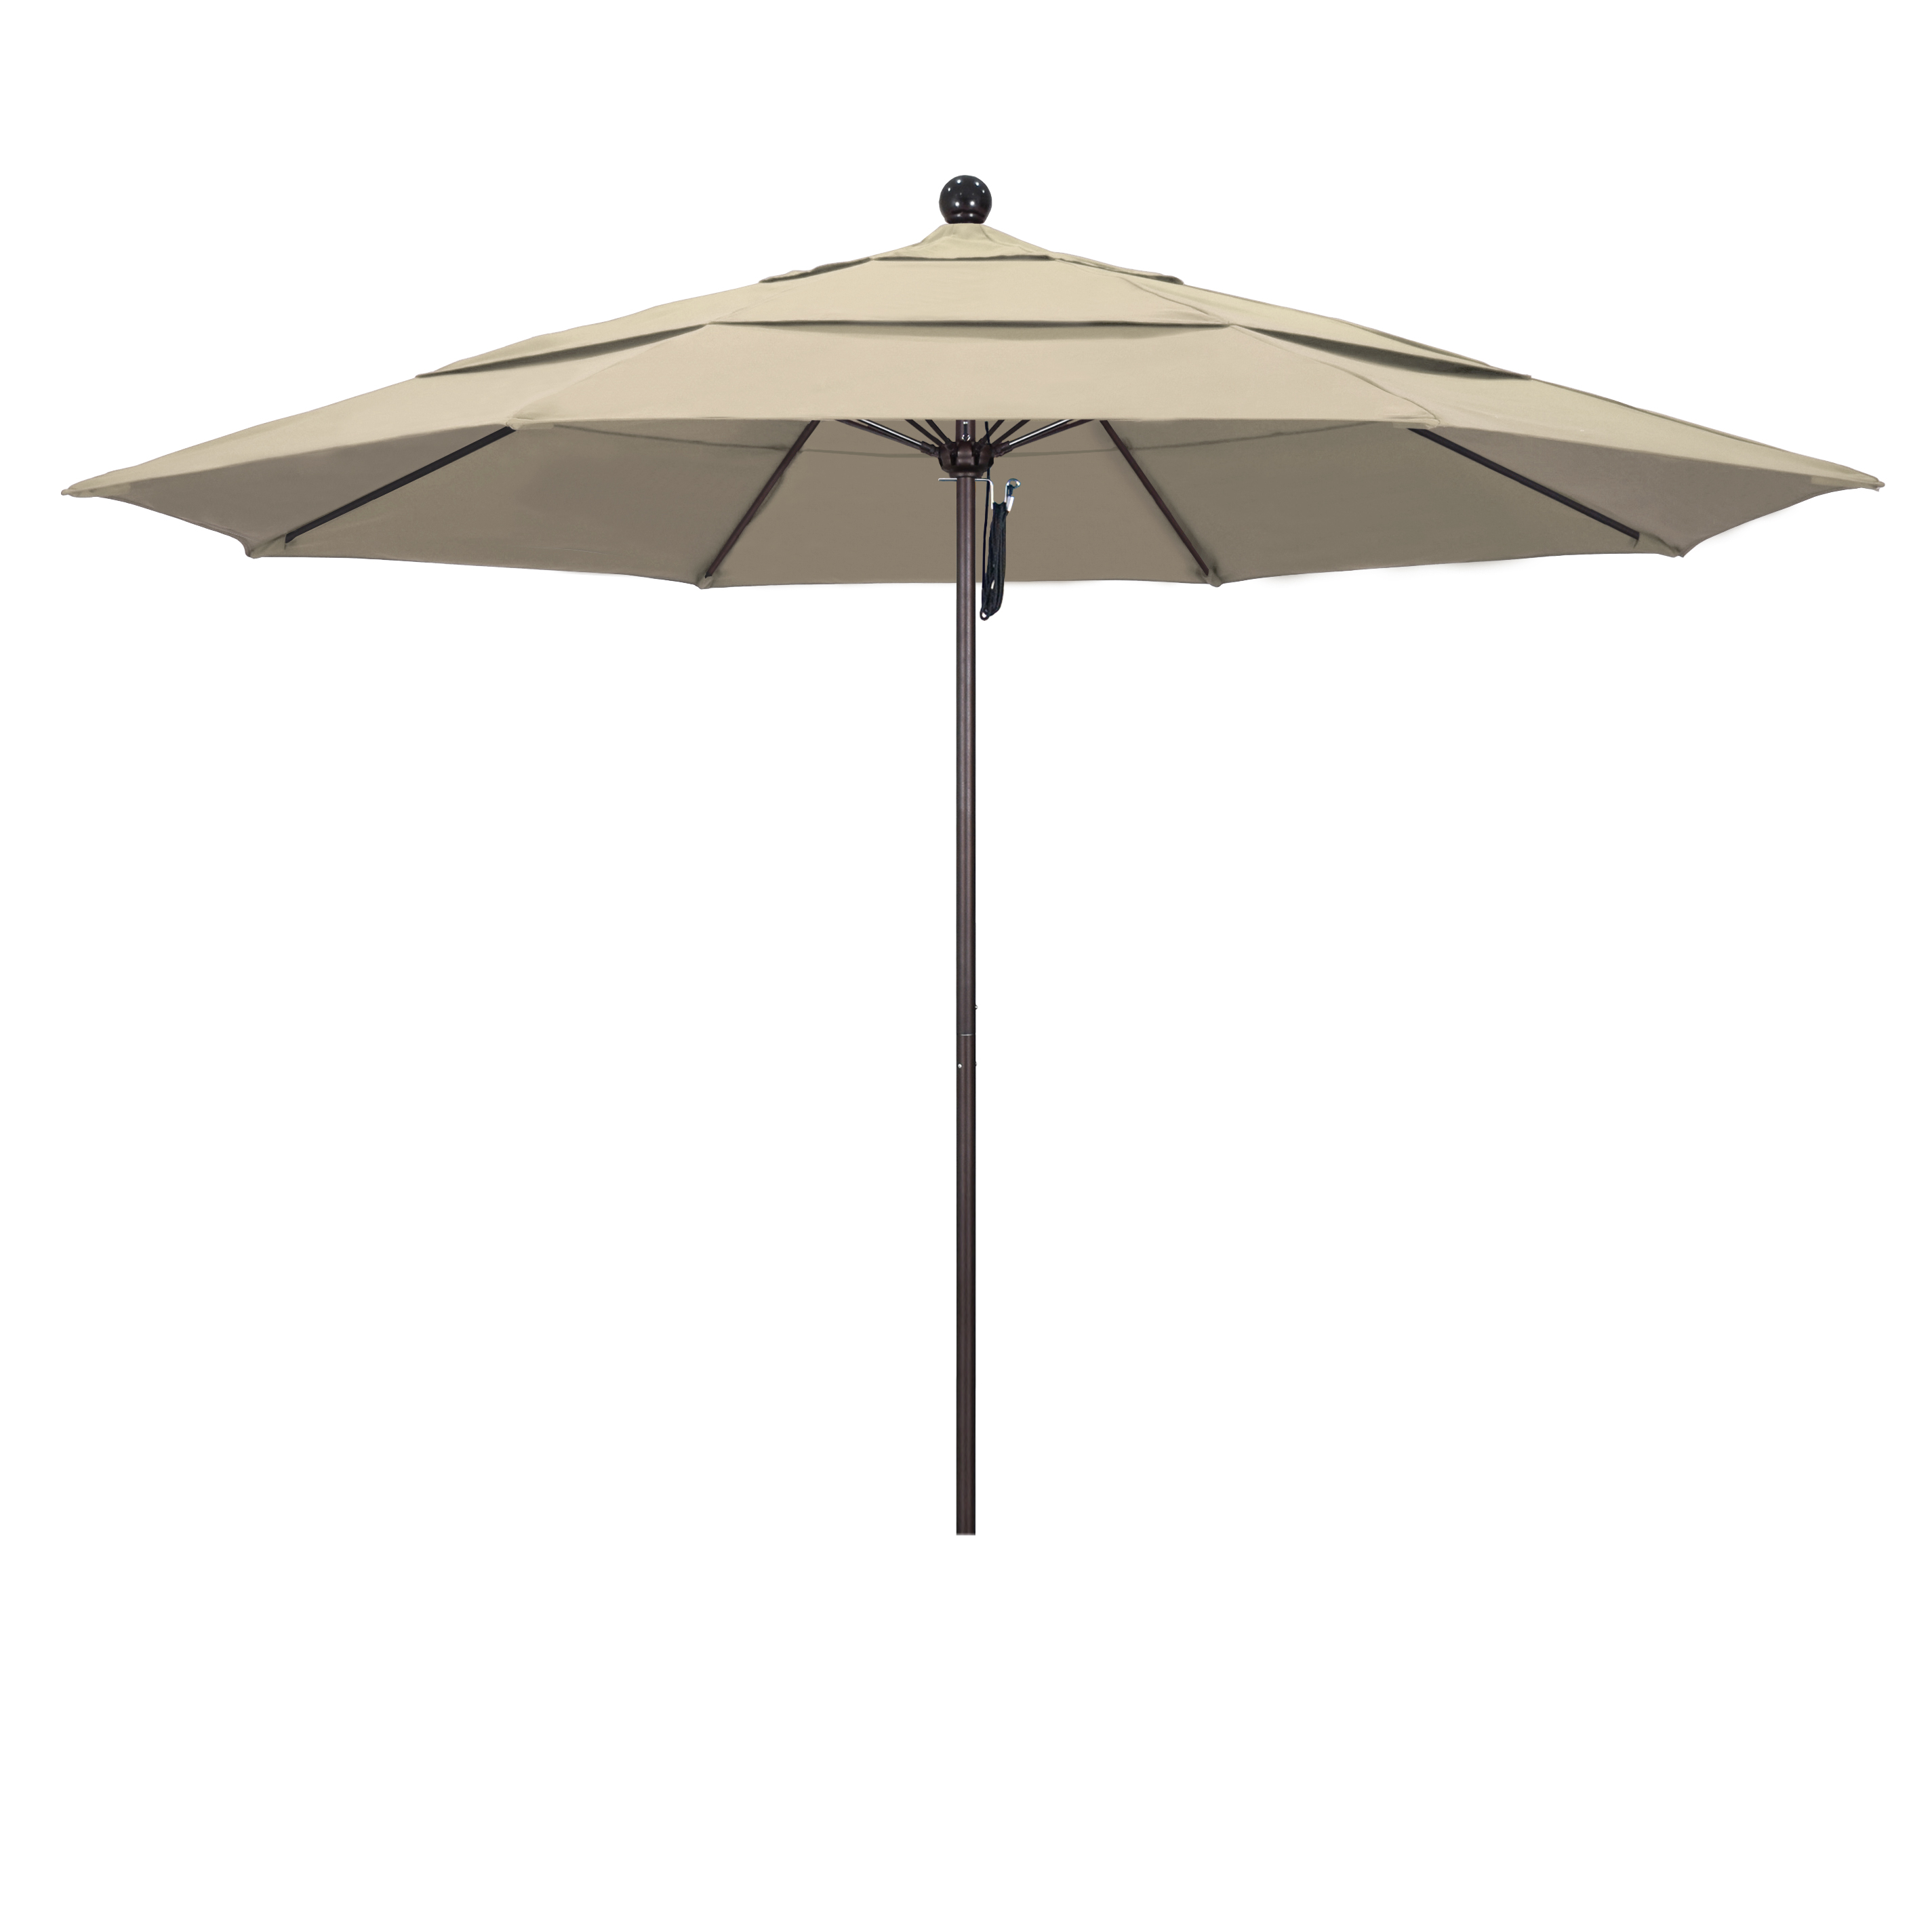 Picture of California Umbrella ALTO118117-5422-DWV 11 ft. Fiberglass Market Umbrella PO DVent Bronze-Sunbrella-Antique Beige